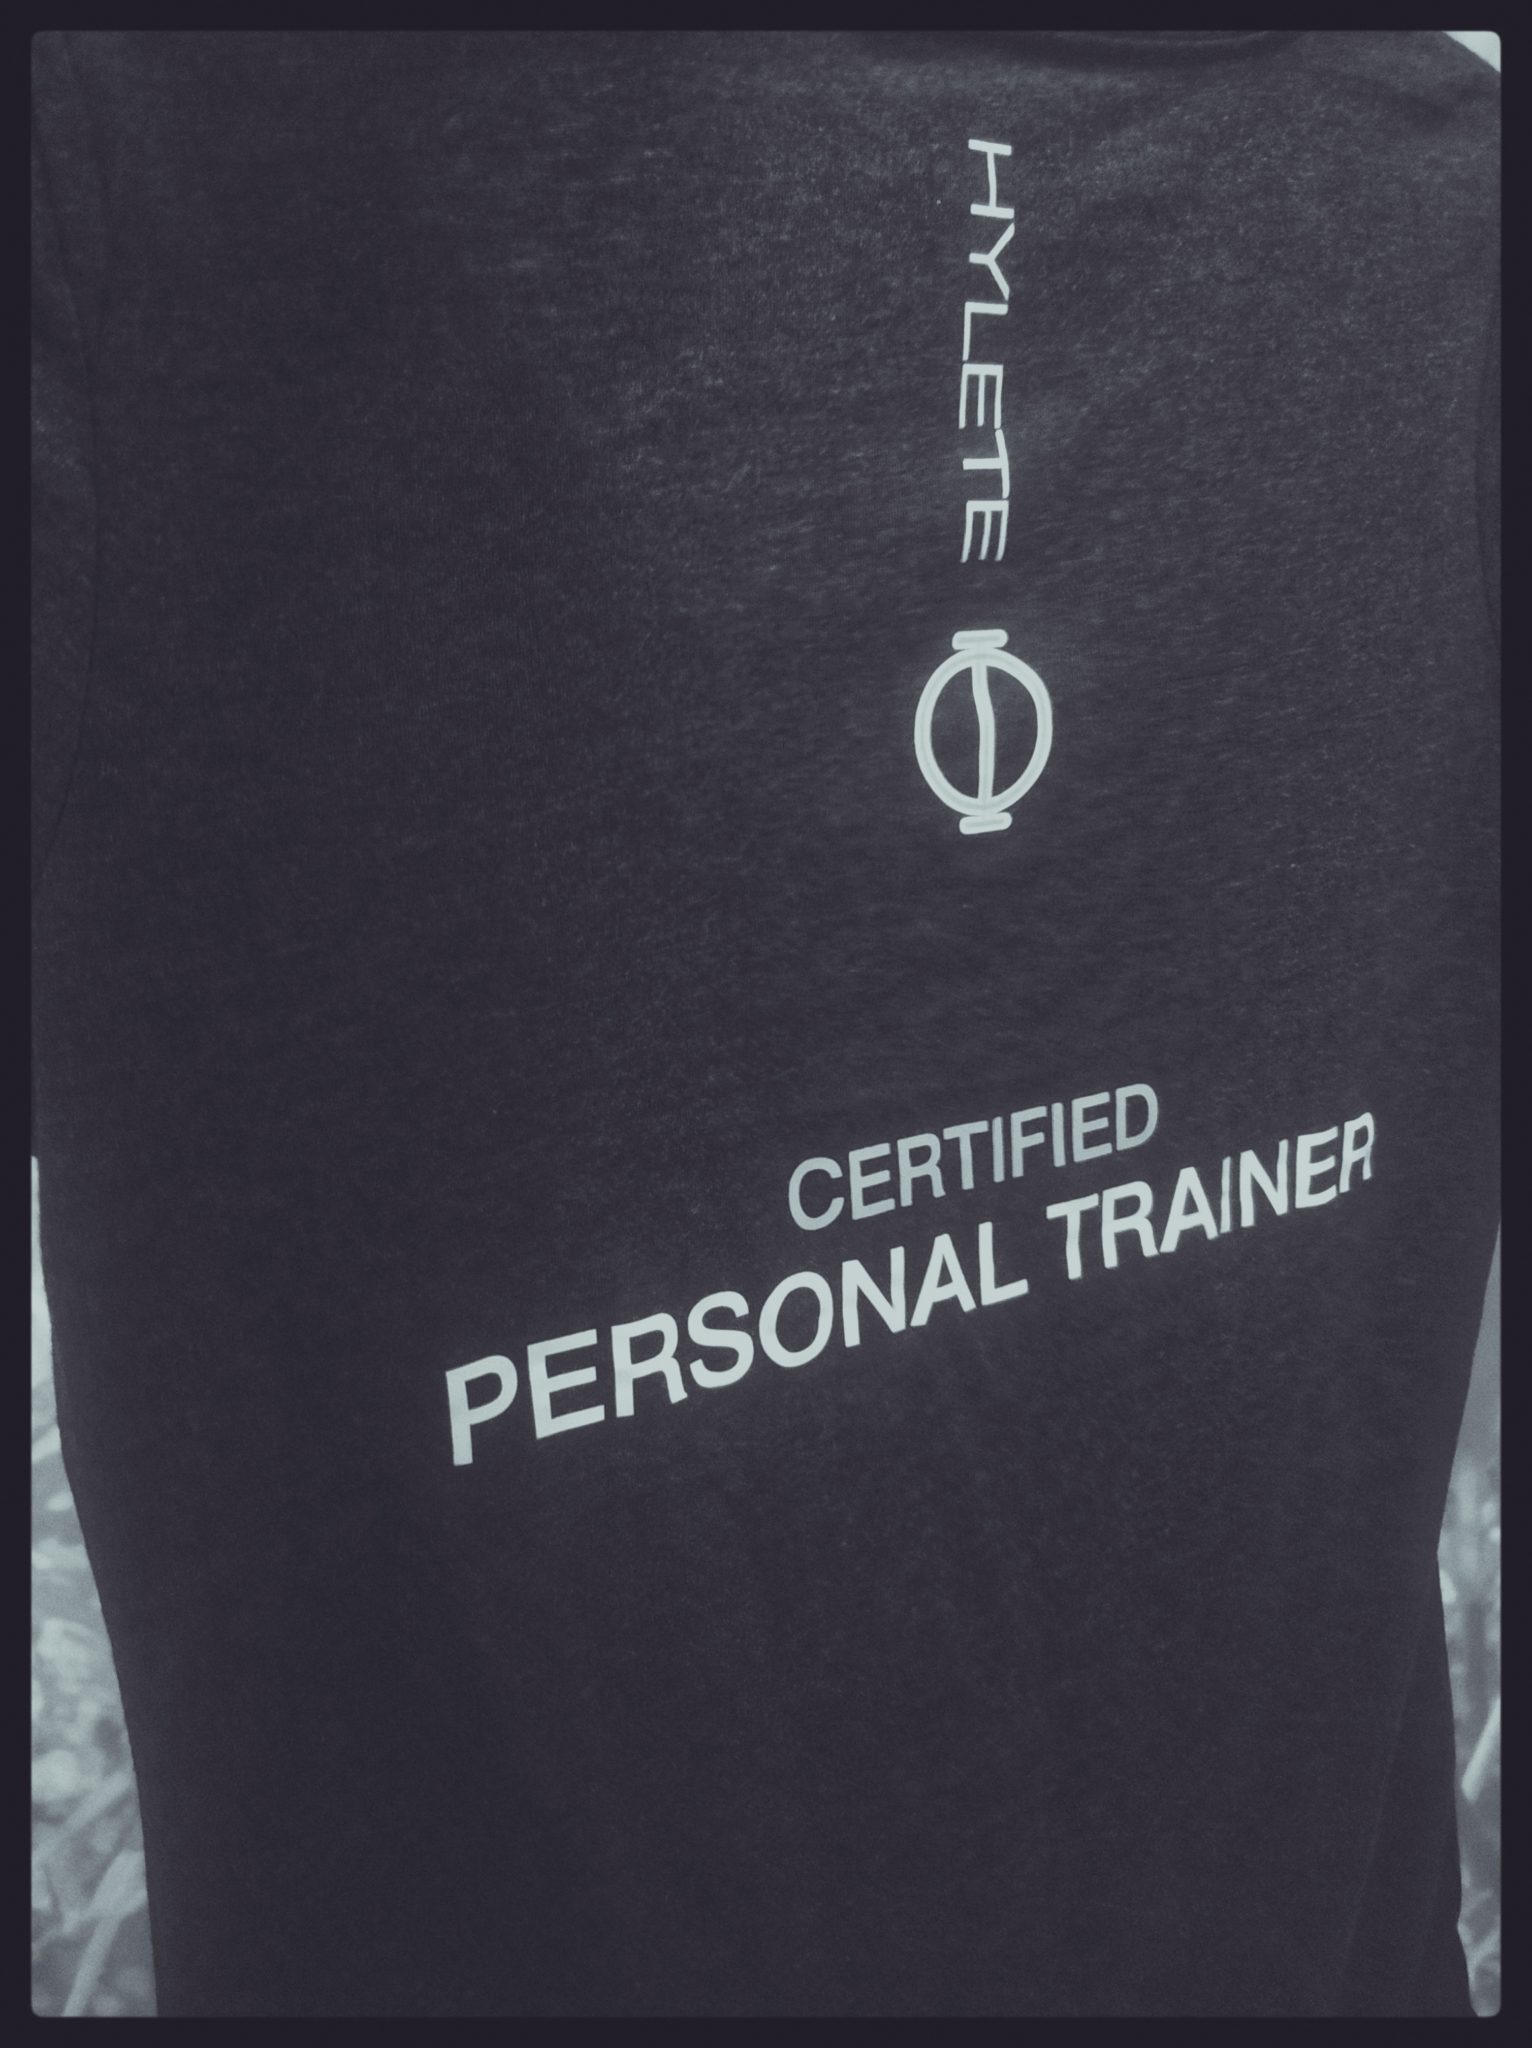 CertifiedPersonalTrainer_t-shirt